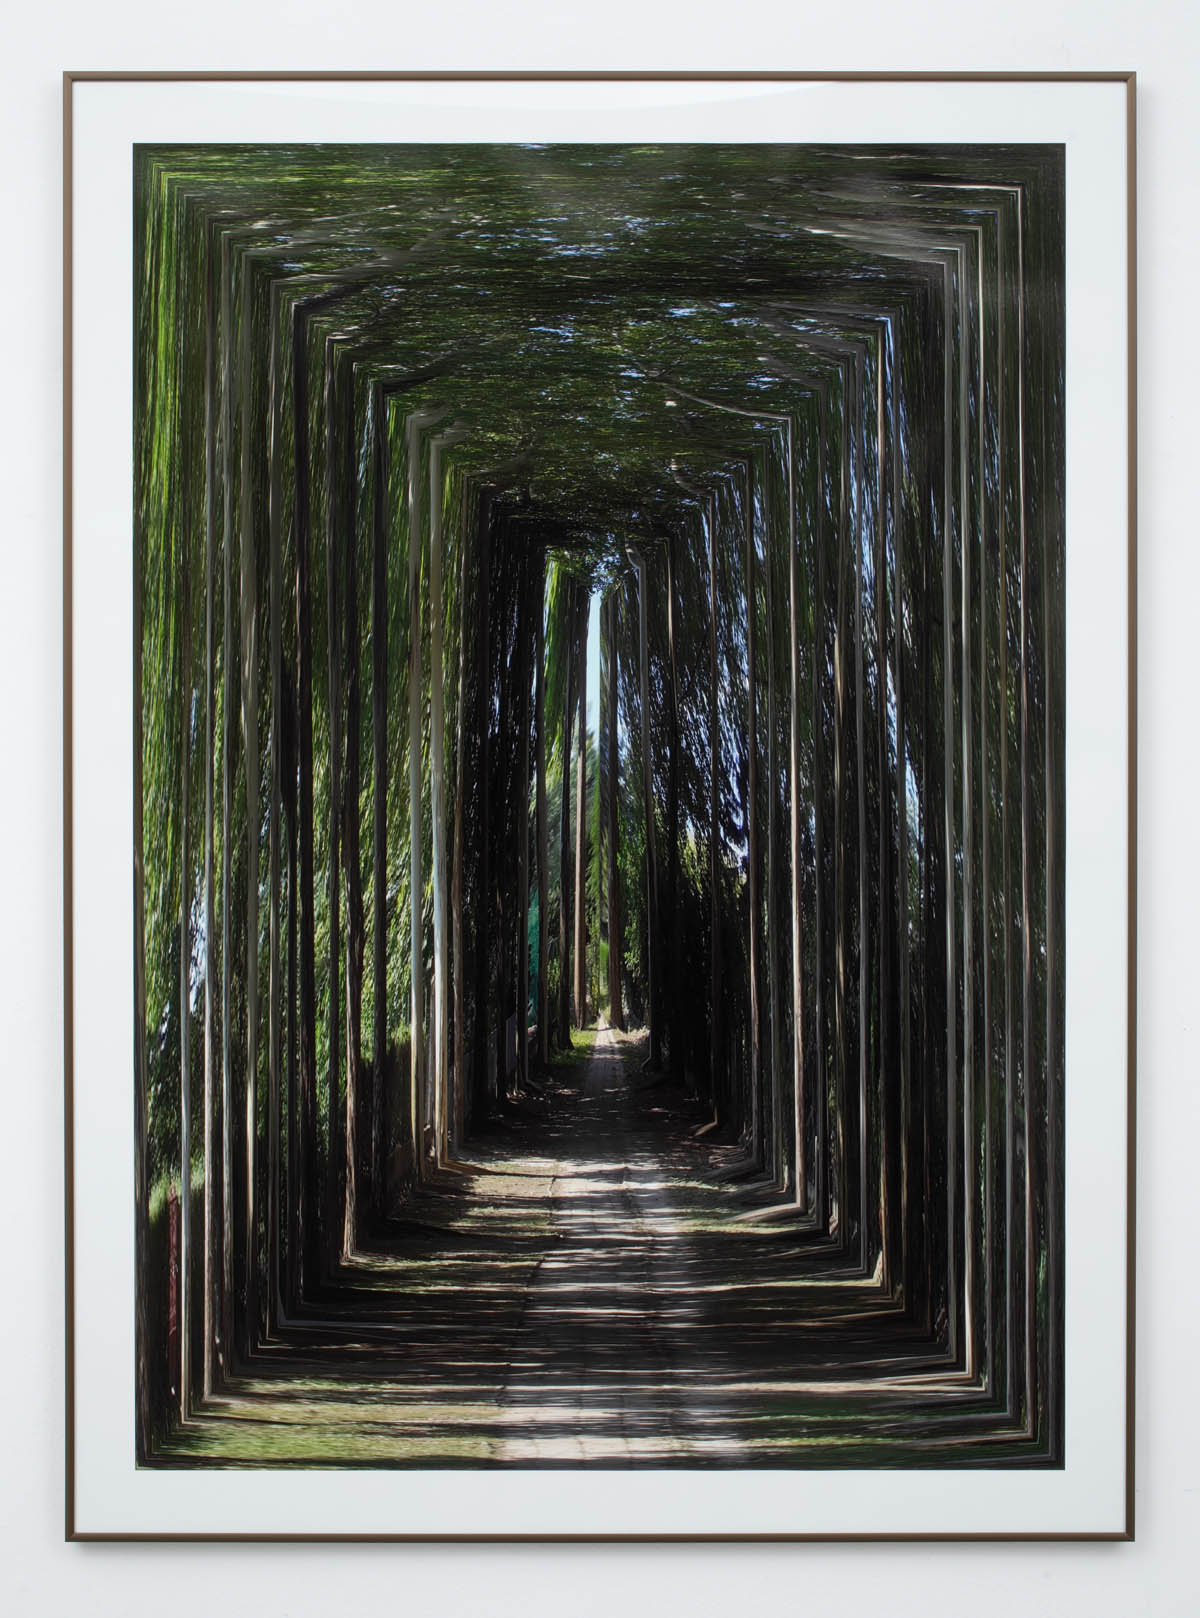 András Zalavári: Plane Tree Allee III (framing perspective), 2018
giclée print, 80 x 110 cm